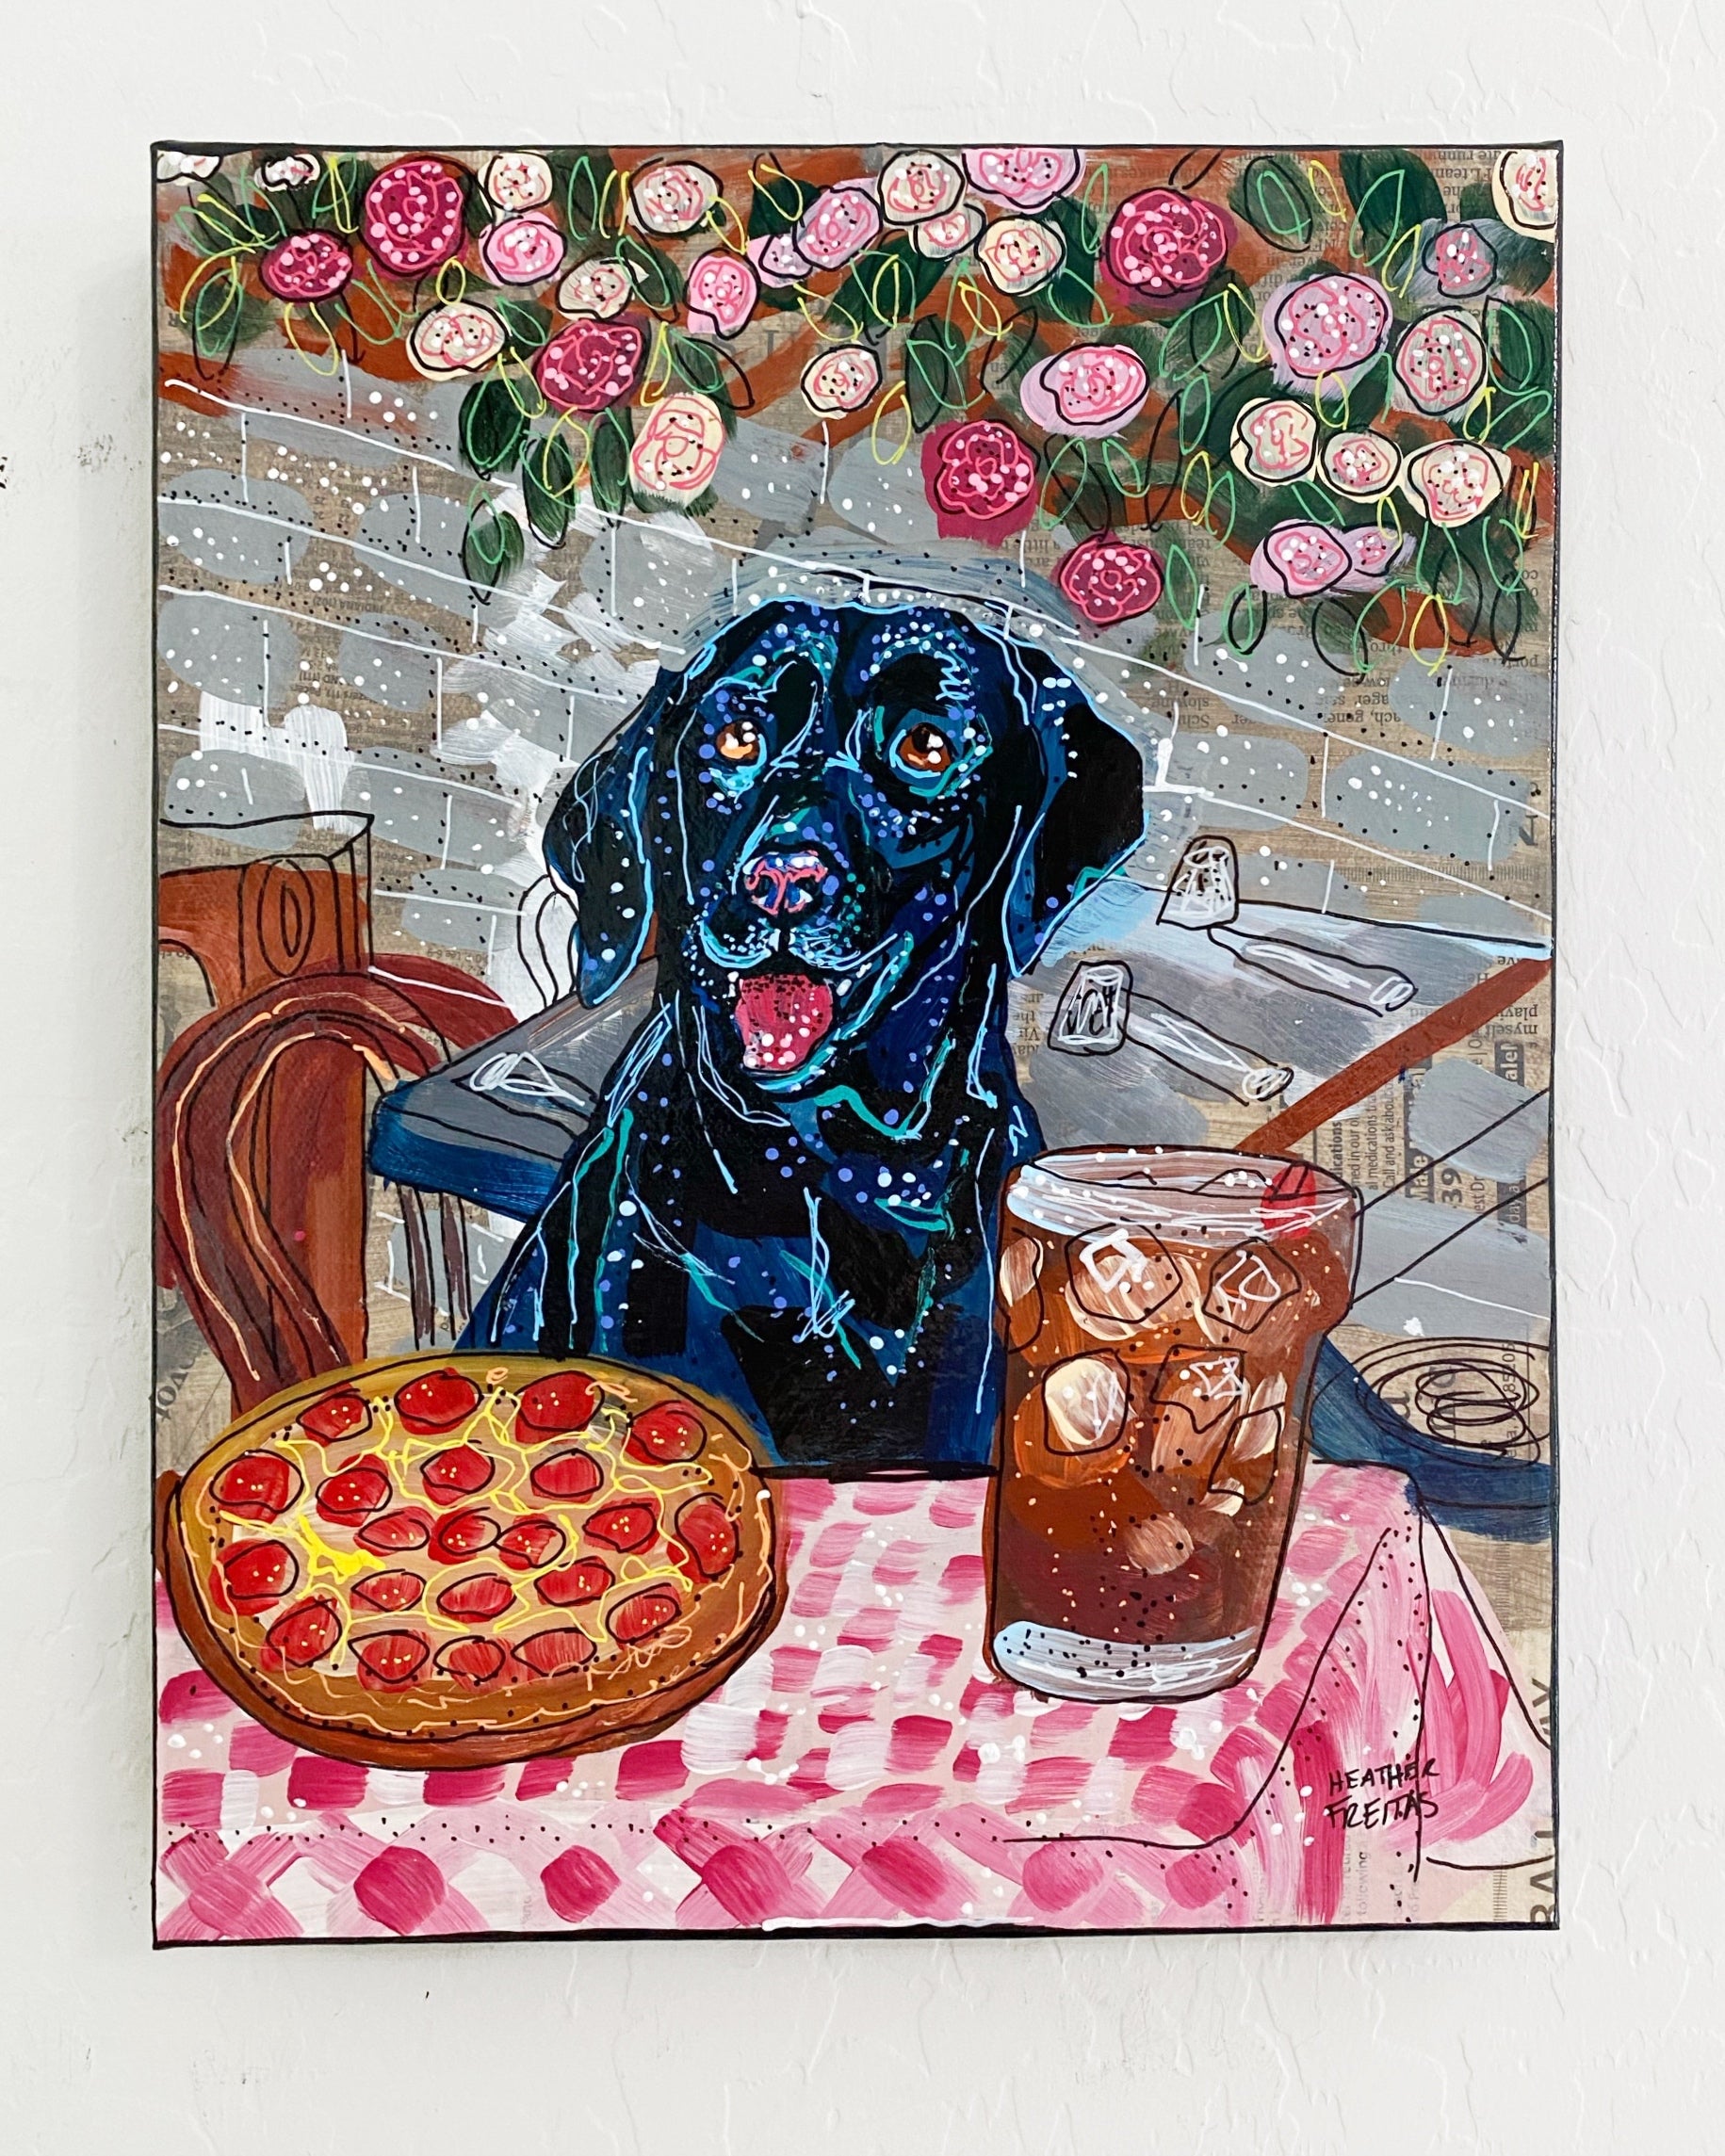 Black Labrador At Pizza Restaurant ( Original Painting ) - Heather Freitas - fine art home deccor